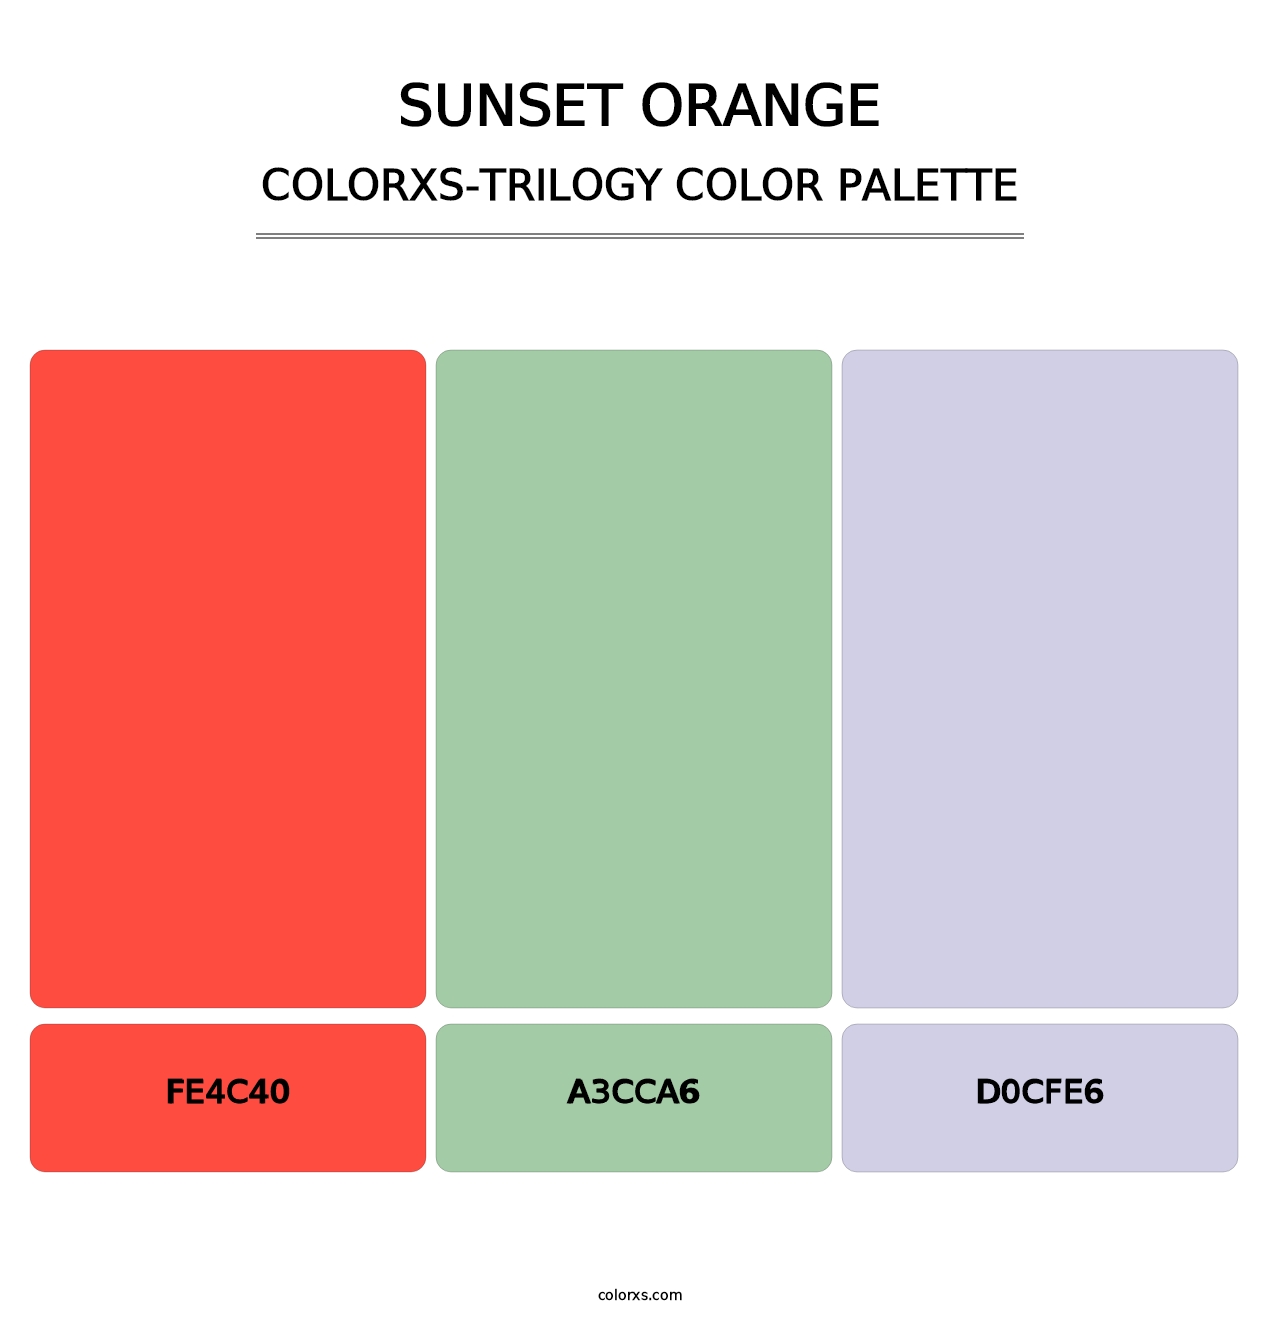 Sunset Orange - Colorxs Trilogy Palette